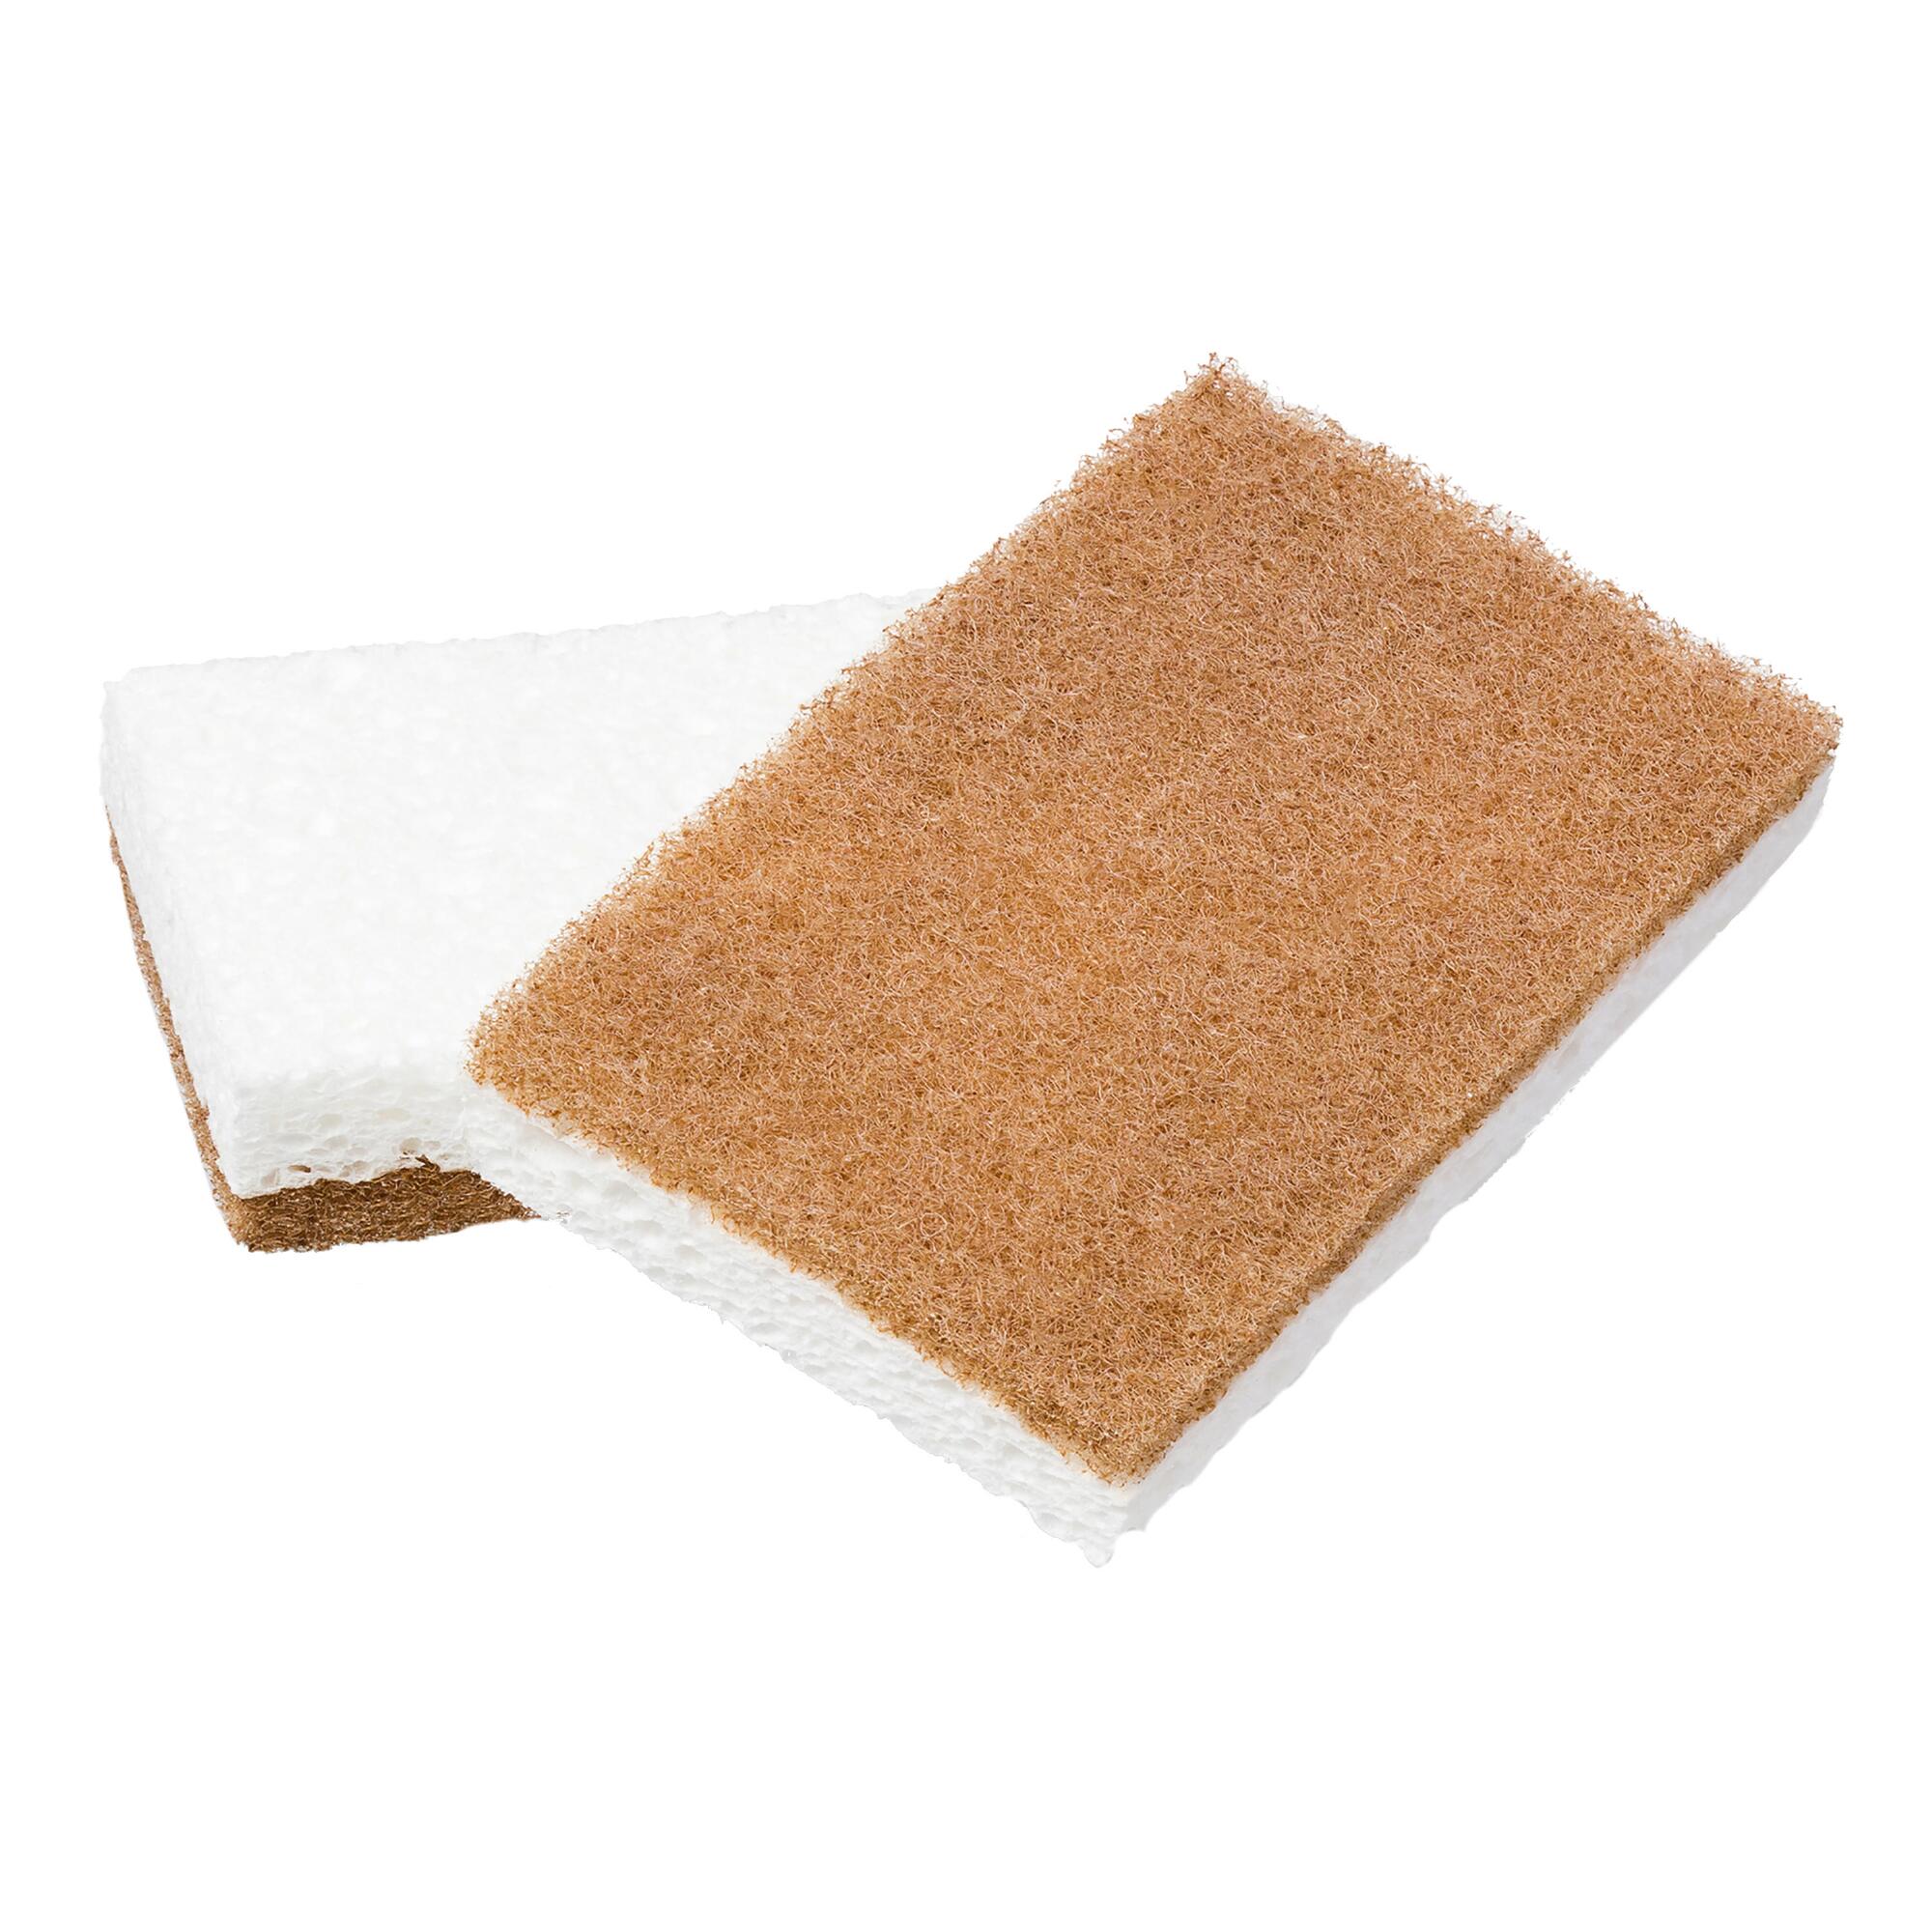 2 Pack Full Circle Walnut Shell Scrubbing Sponges Set of 2: White - Natural Fiber by World Market